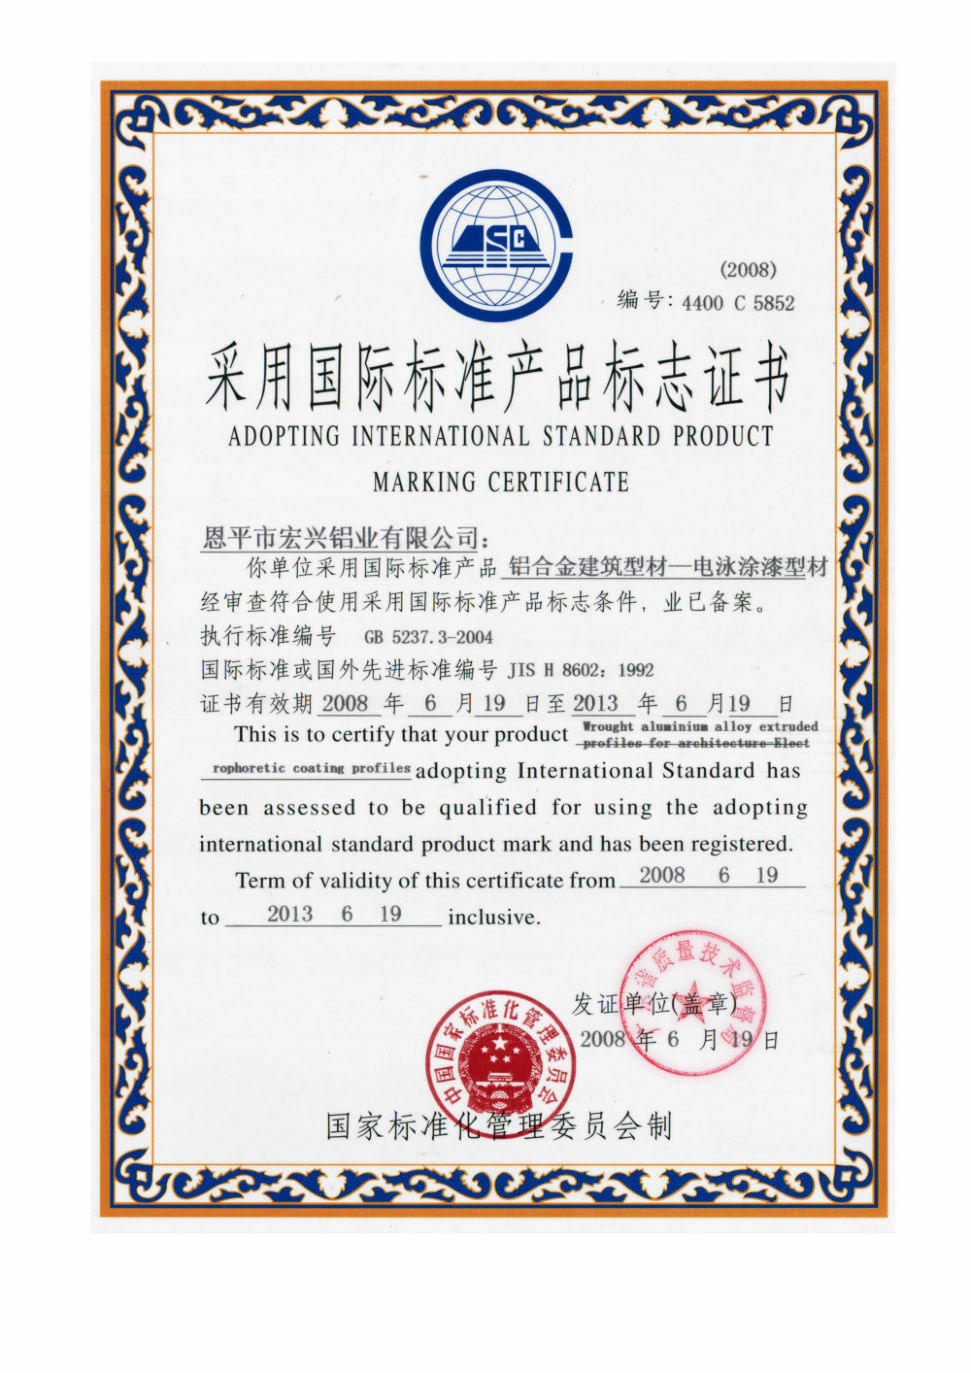 Adopting international standard product certificate electrophoresis